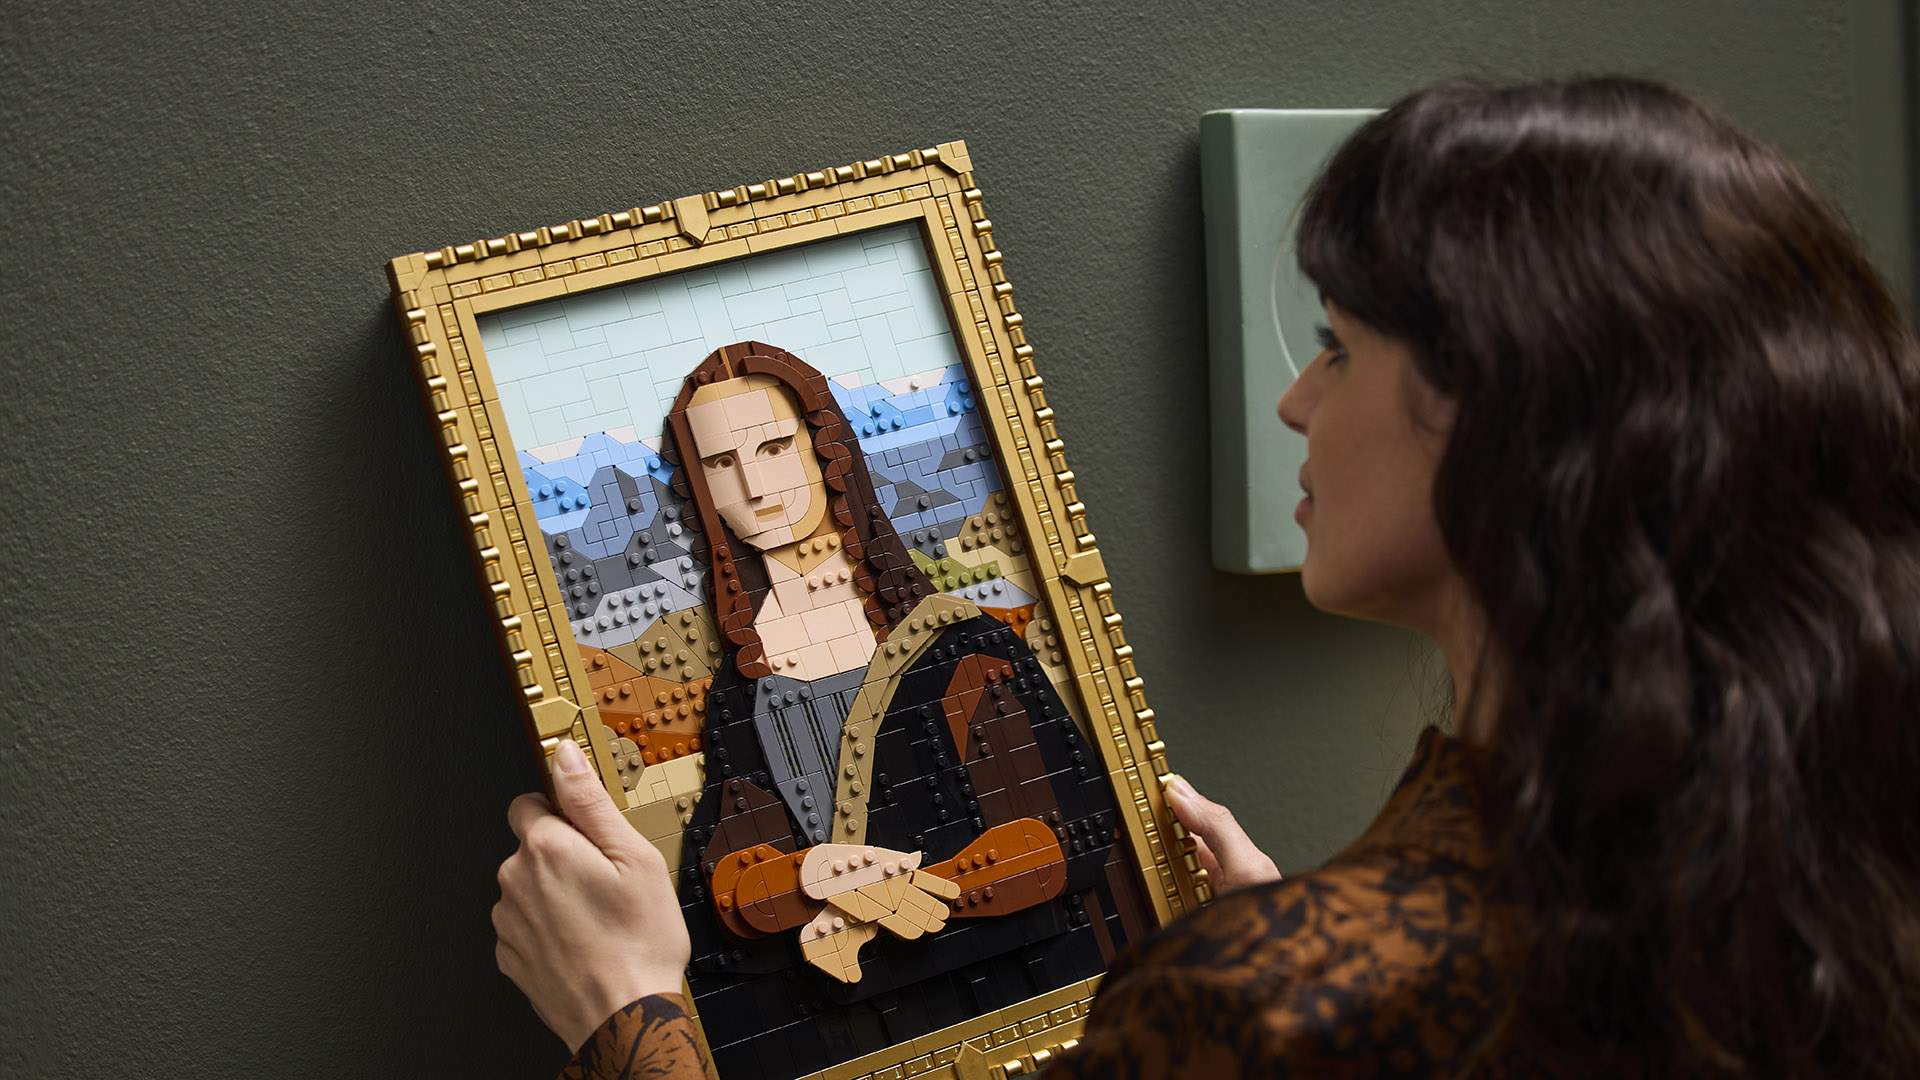 Lego's New 'Mona Lisa' Kit Will Let You Display Leonardo da Vinci's Masterpiece on Your Own Wall